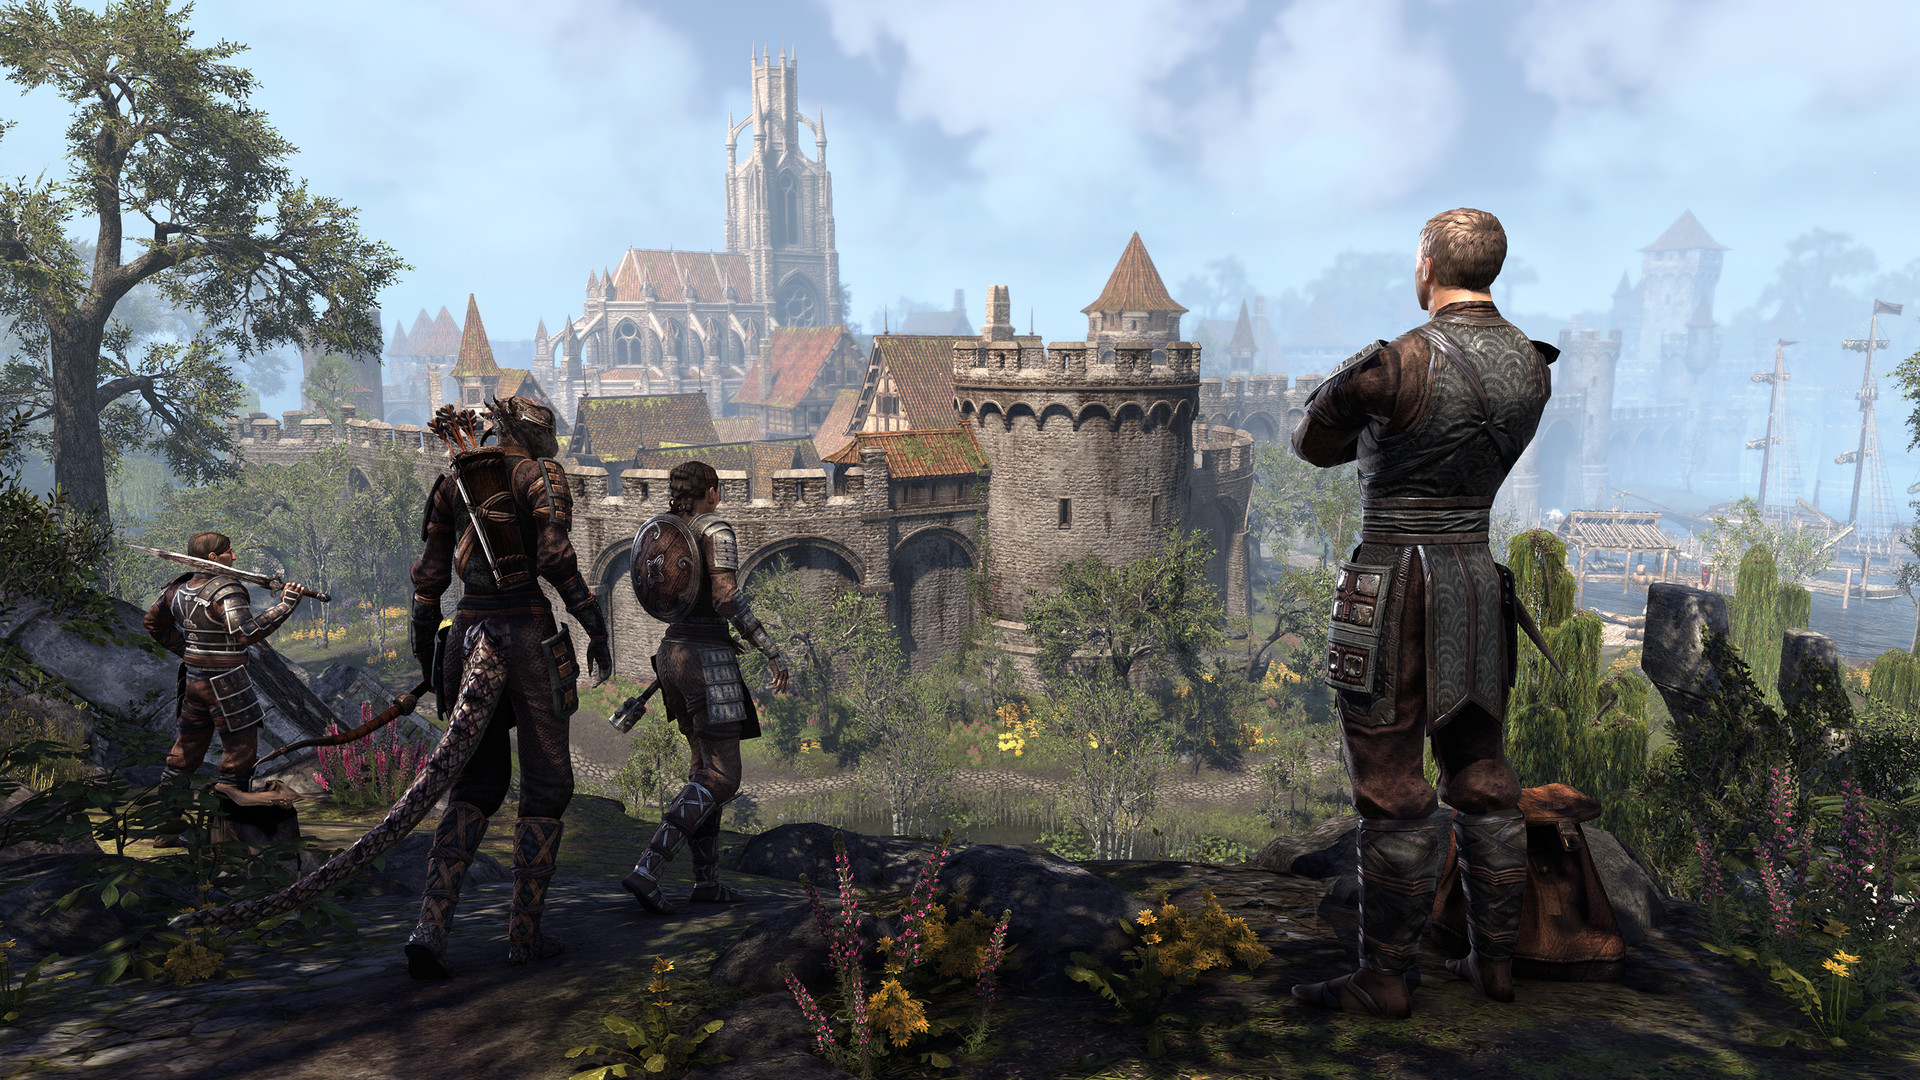 The Elder Scrolls Online Blackwood Collection (Xbox One)